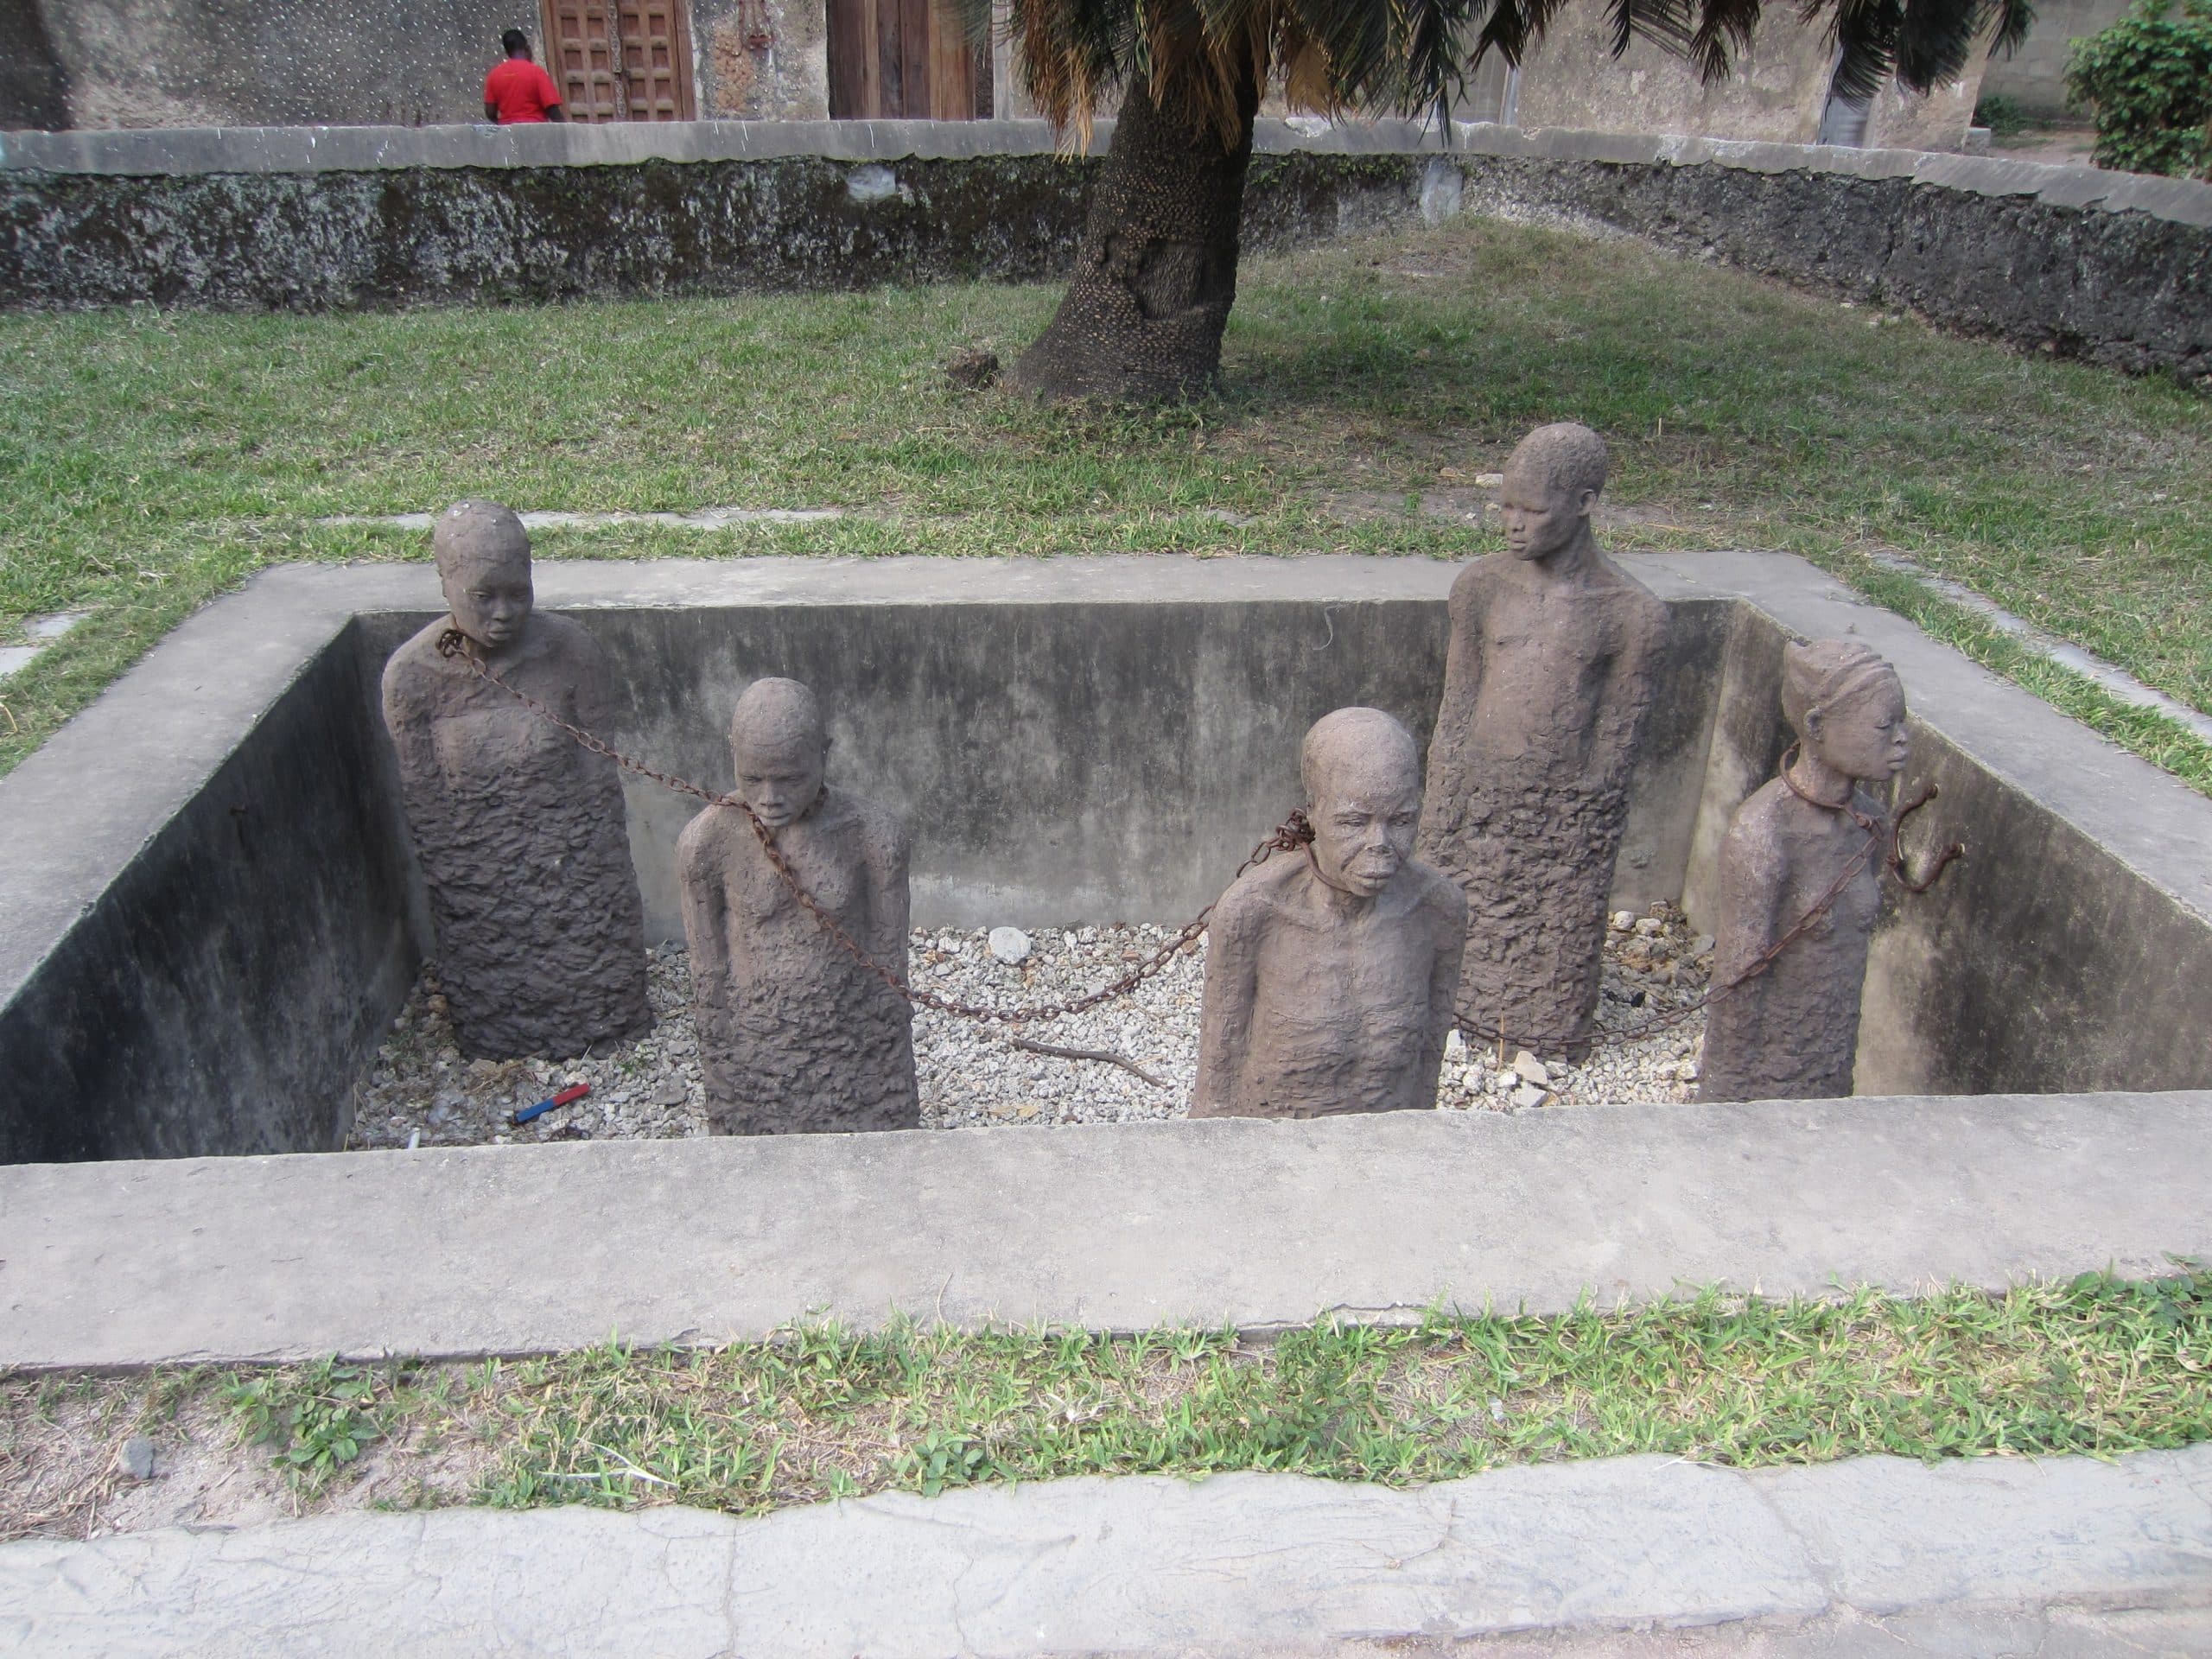 slavery memorial